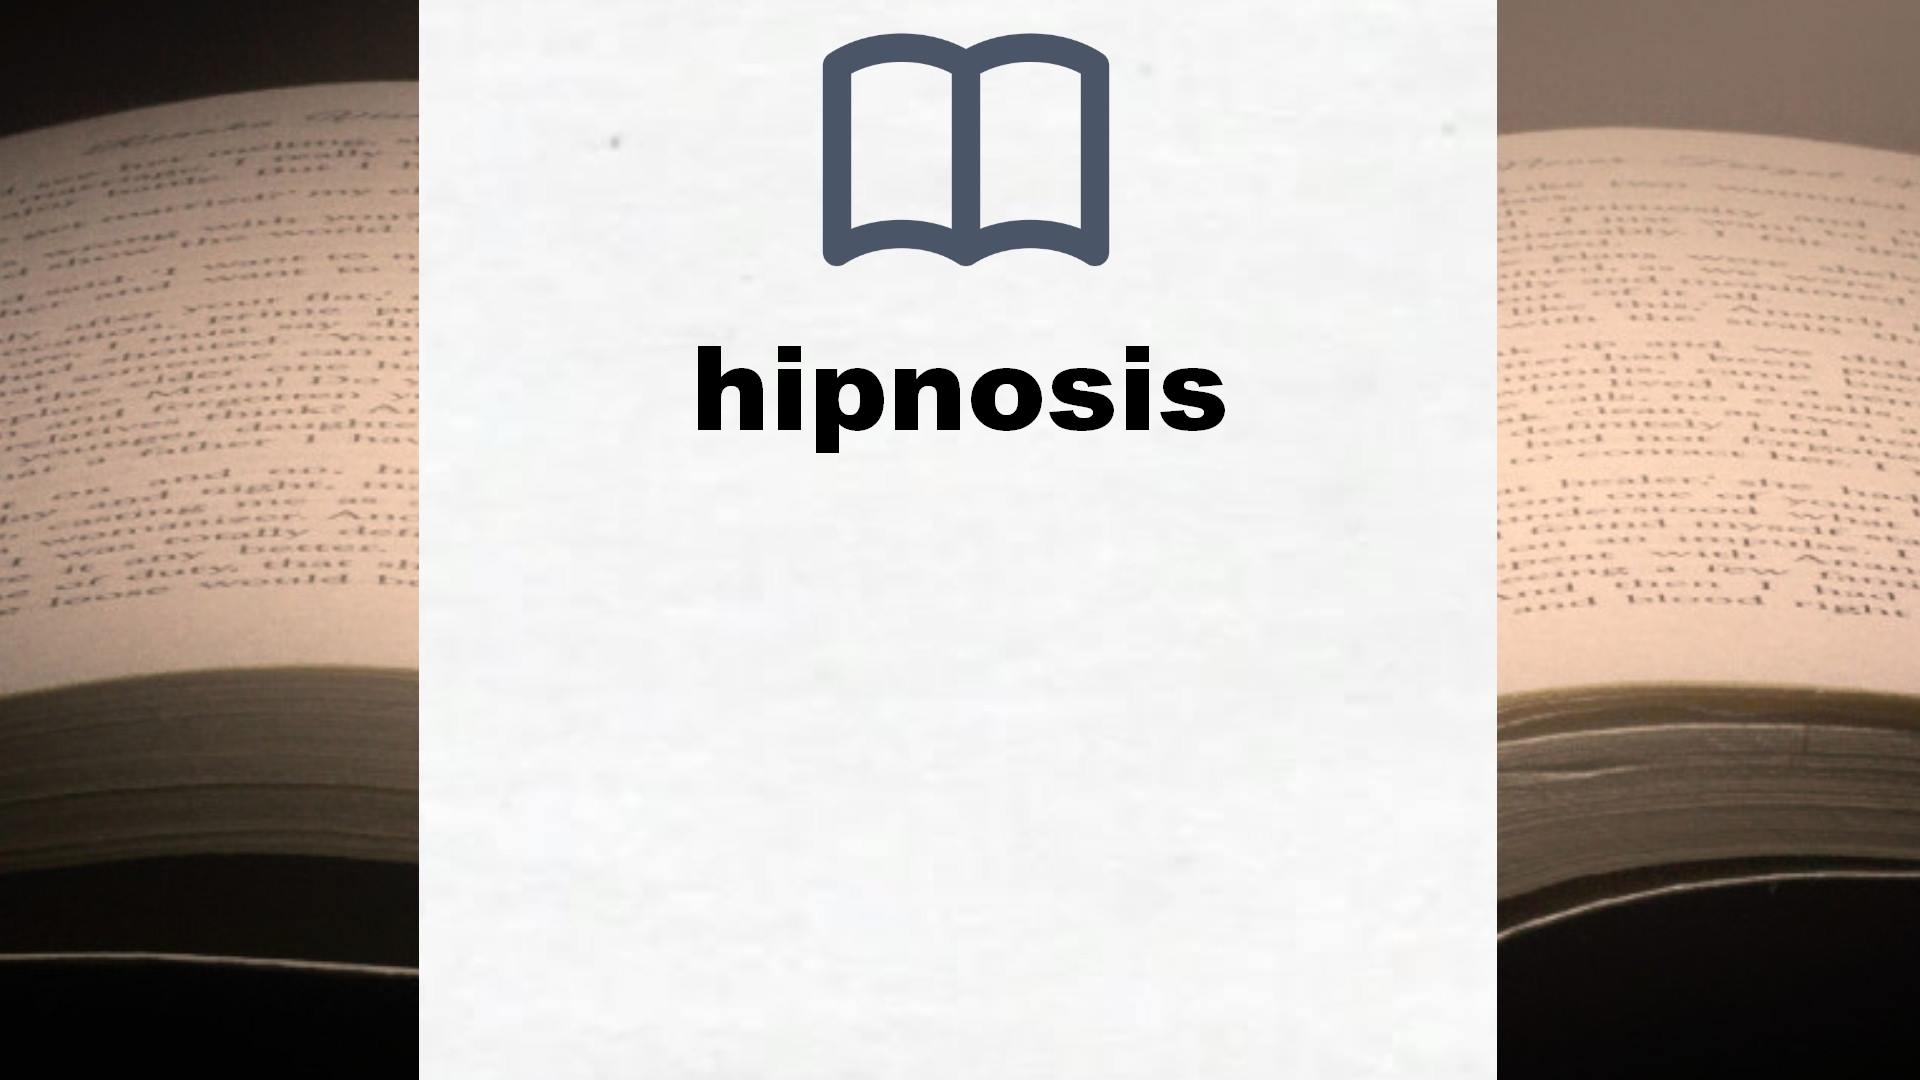 Libros sobre hipnosis